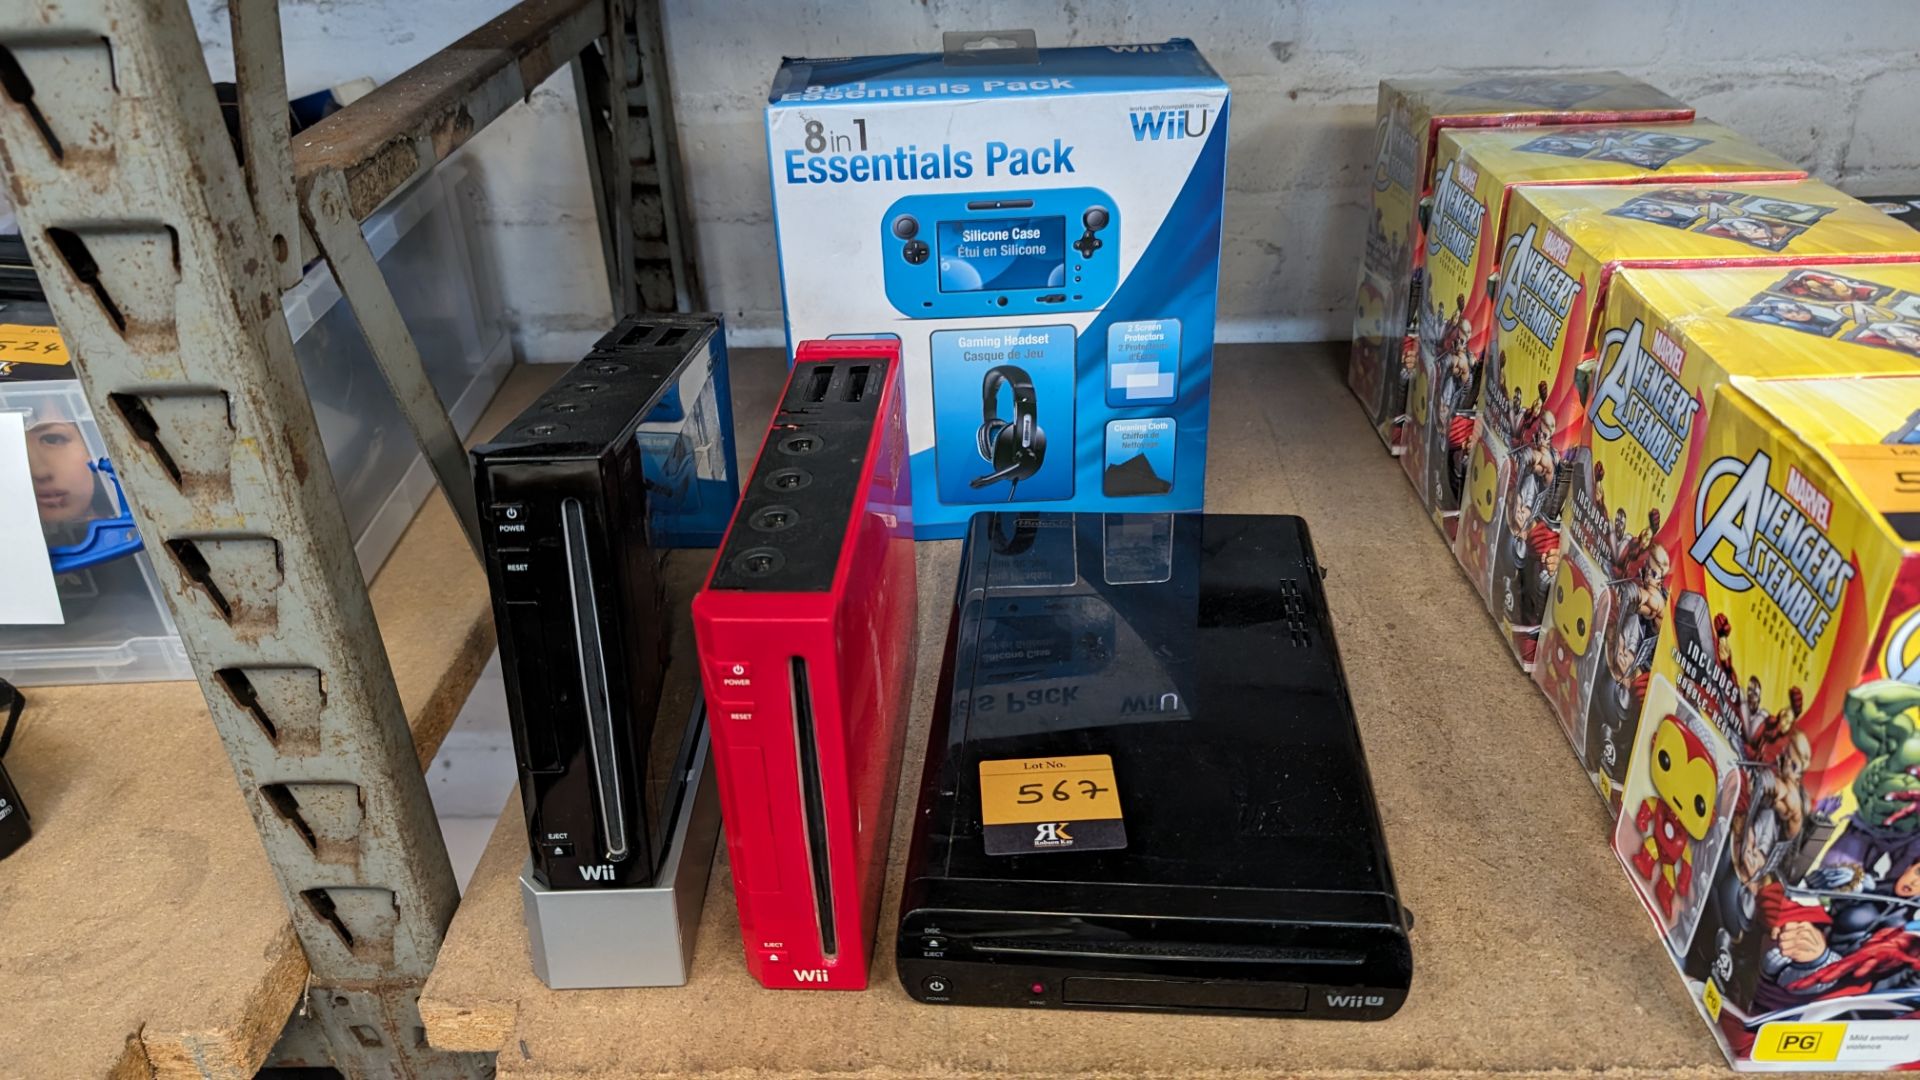 3 off Nintendo Wii consoles plus 1 off Wii Essentials pack